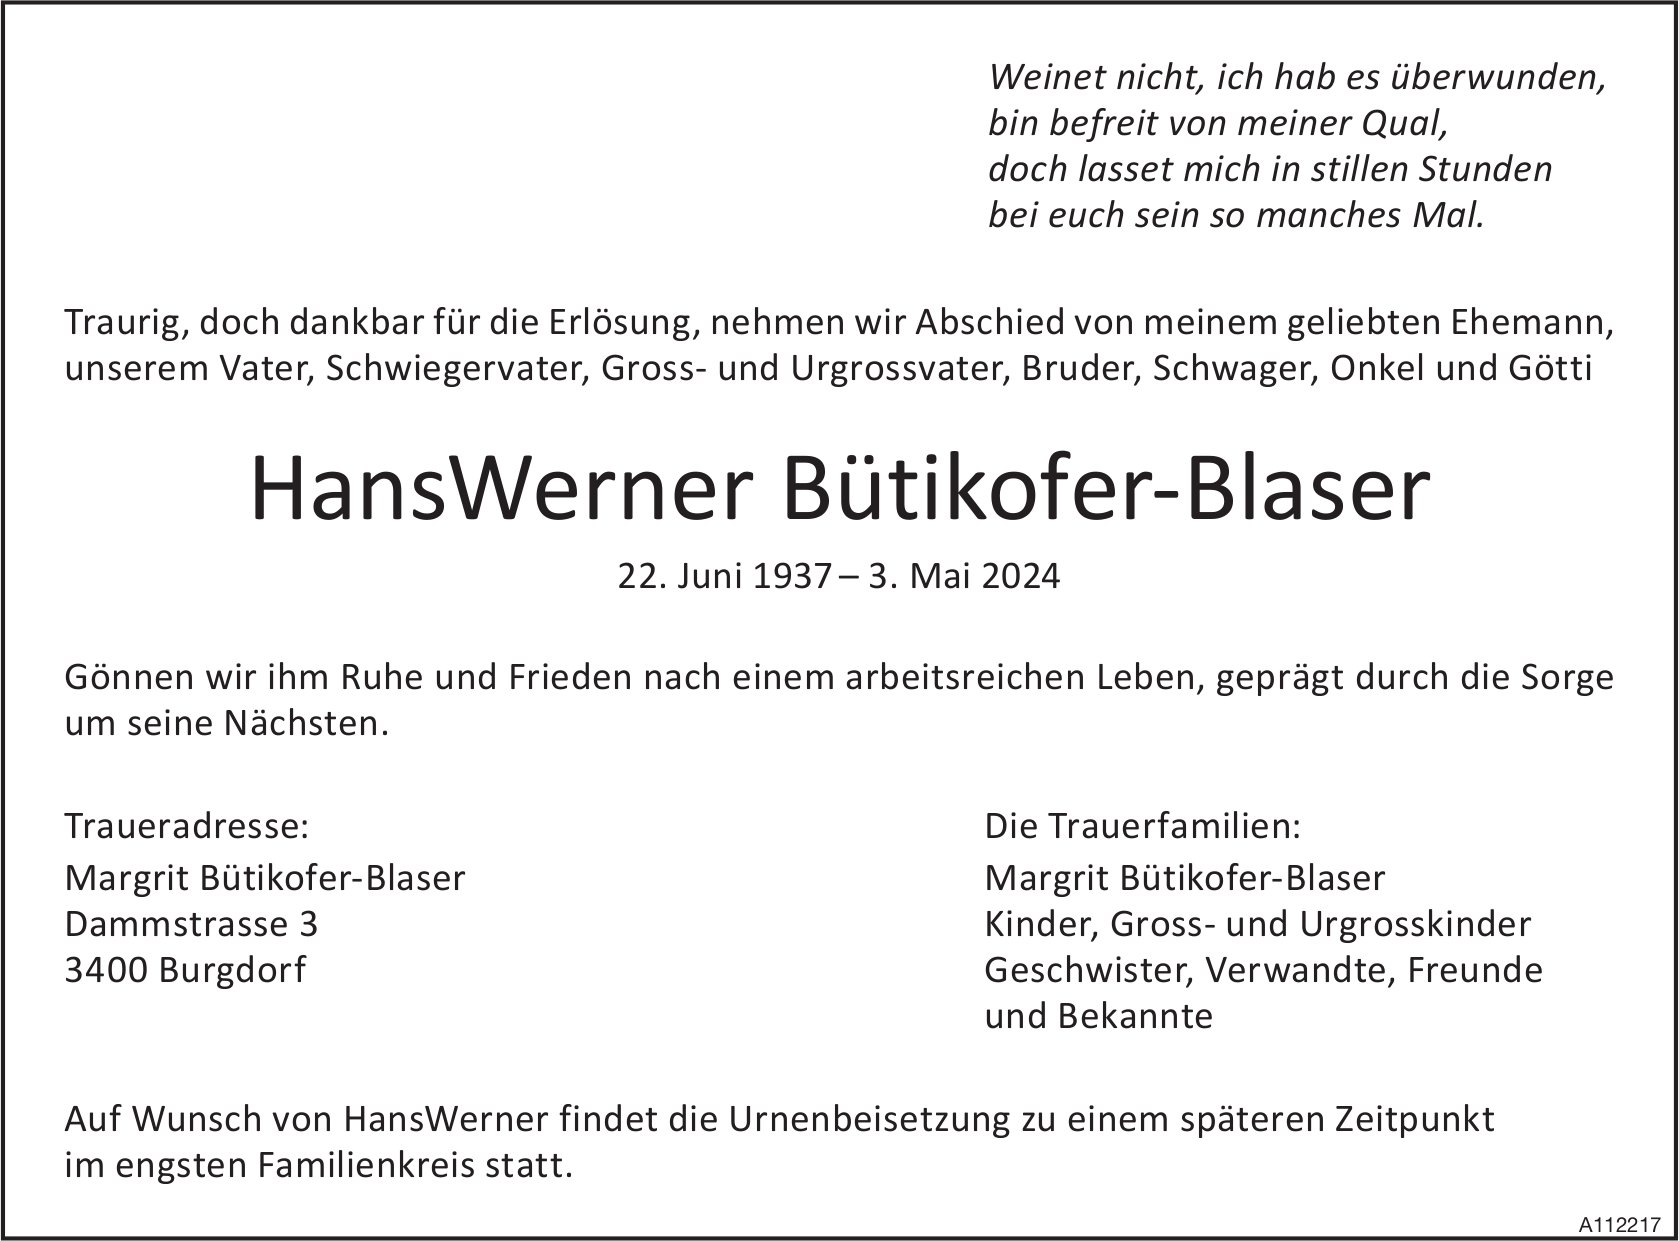 HansWerner Bütikofer-Blaser, Mai 2024 / TA